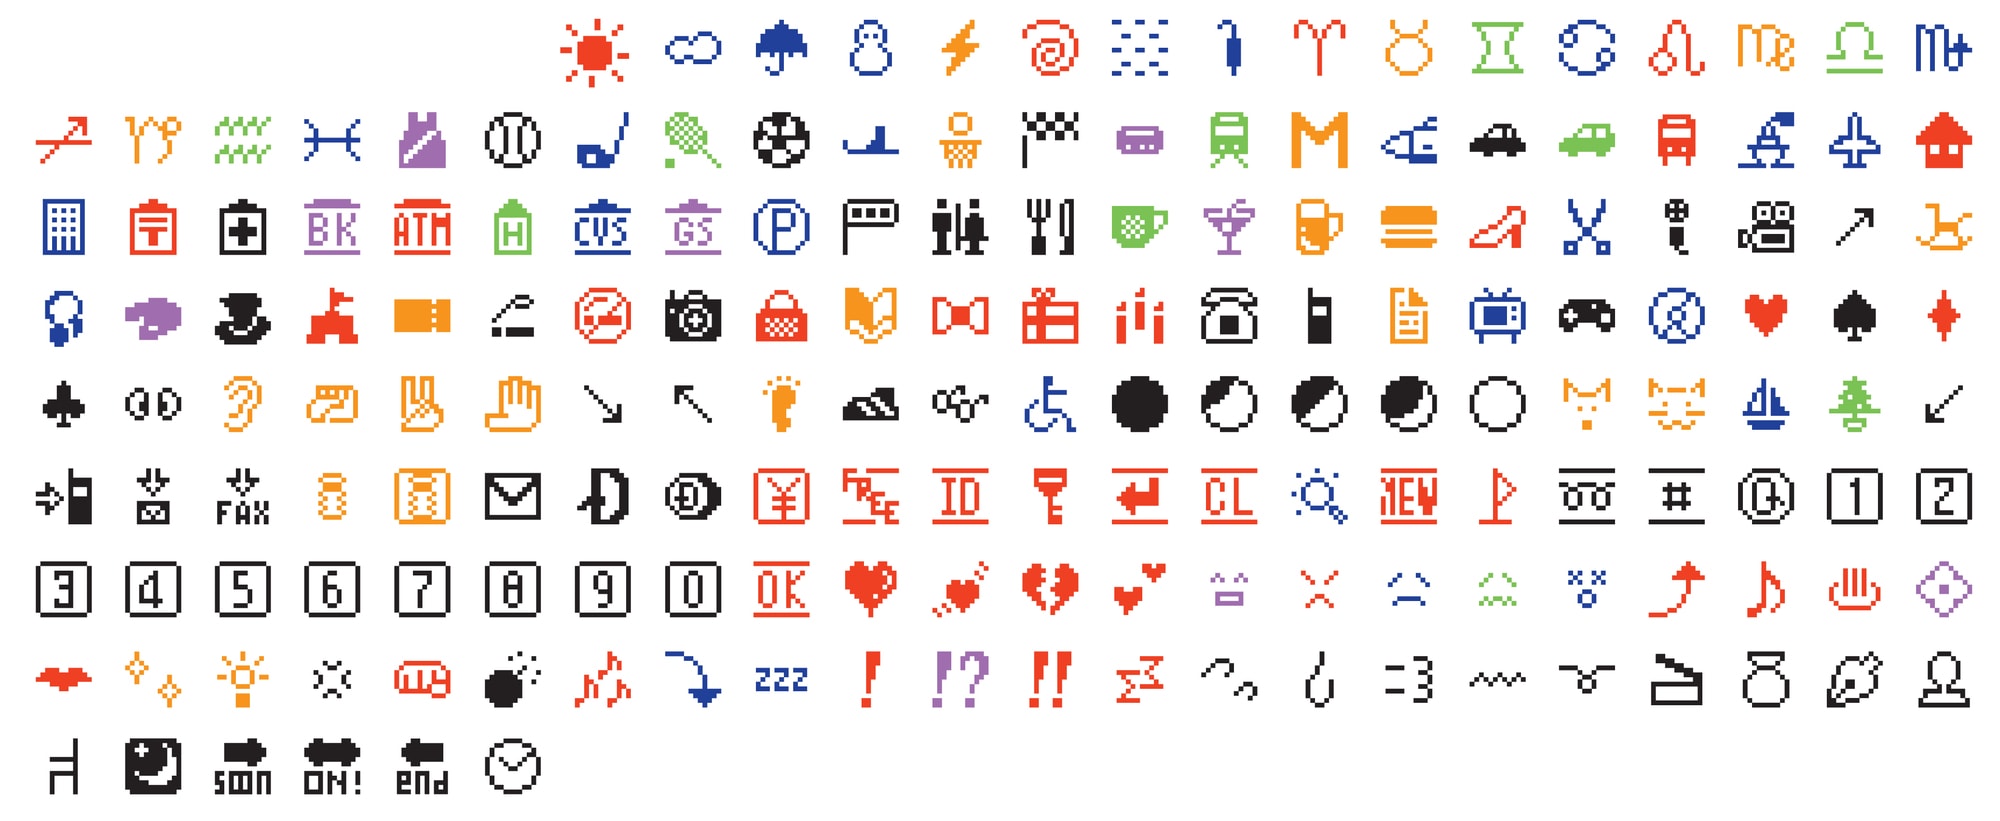 NTT DoCoMo's original emoji